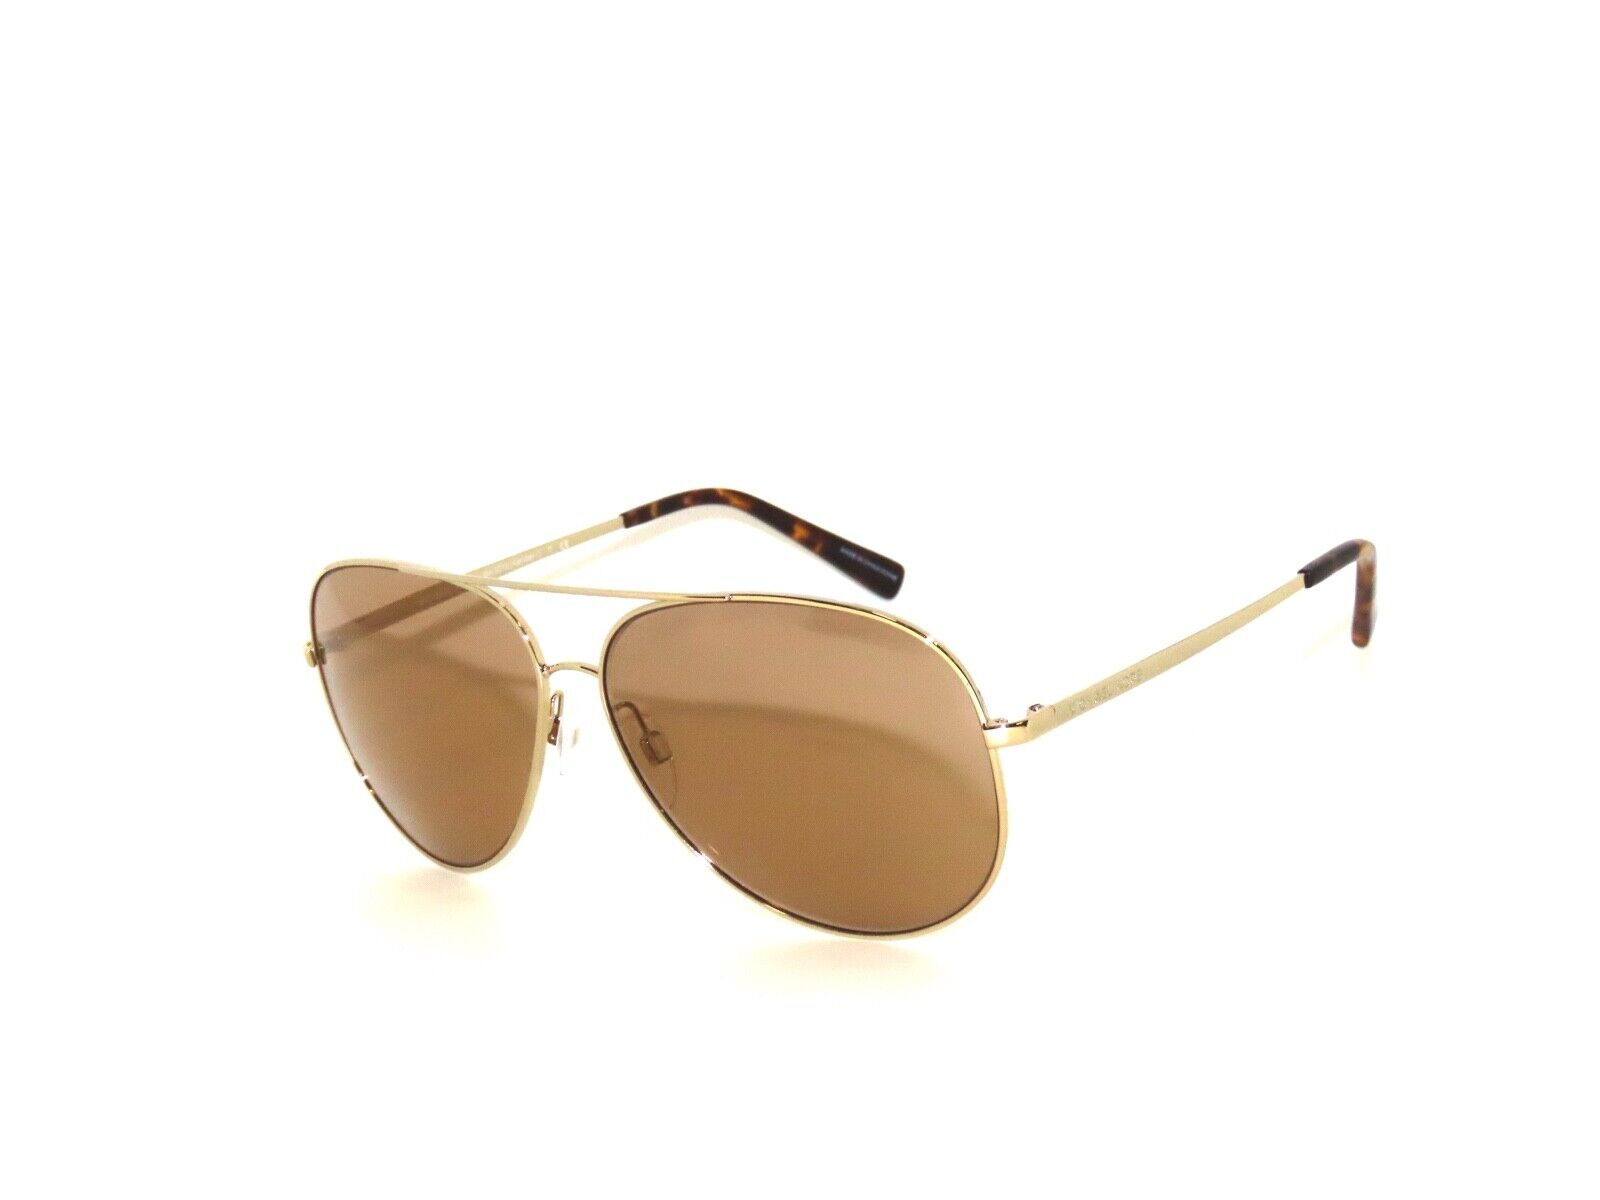 Michael Kors Kendall MK5016 10265 60 Sunglasses Shiny Rose GoldTone   Women  Sunglasses  Eyewear  Categories  Skysales SA Site